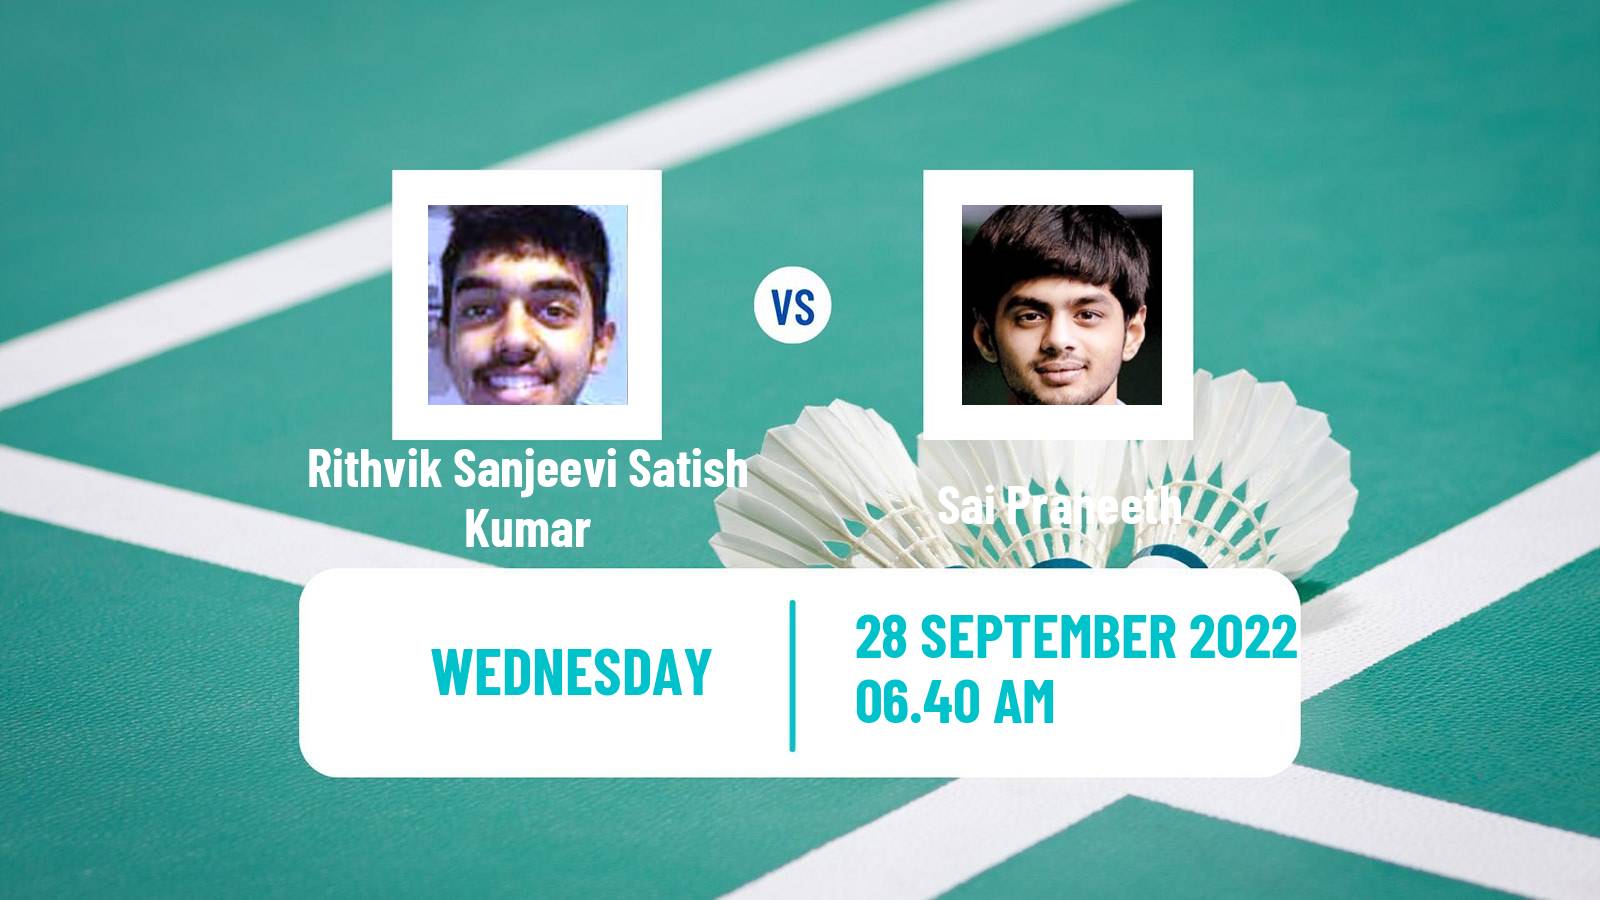 Badminton Badminton Rithvik Sanjeevi Satish Kumar - Sai Praneeth